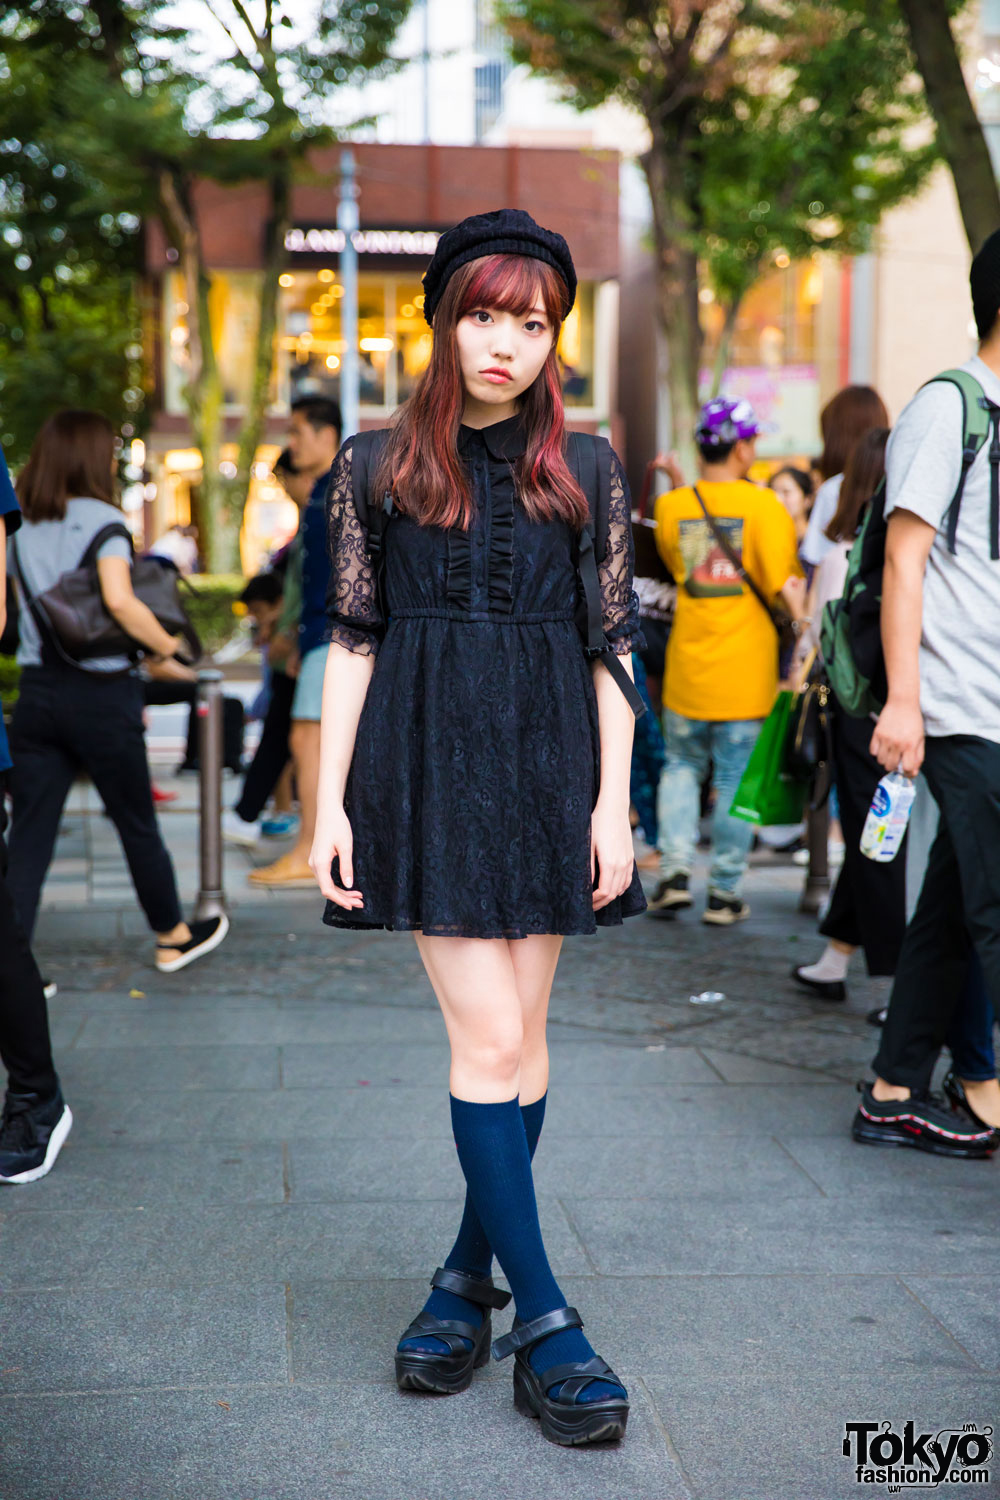 Harajuku Girl in Bubbles Tokyo Black Lace Dress, Platform Sandals & Beret